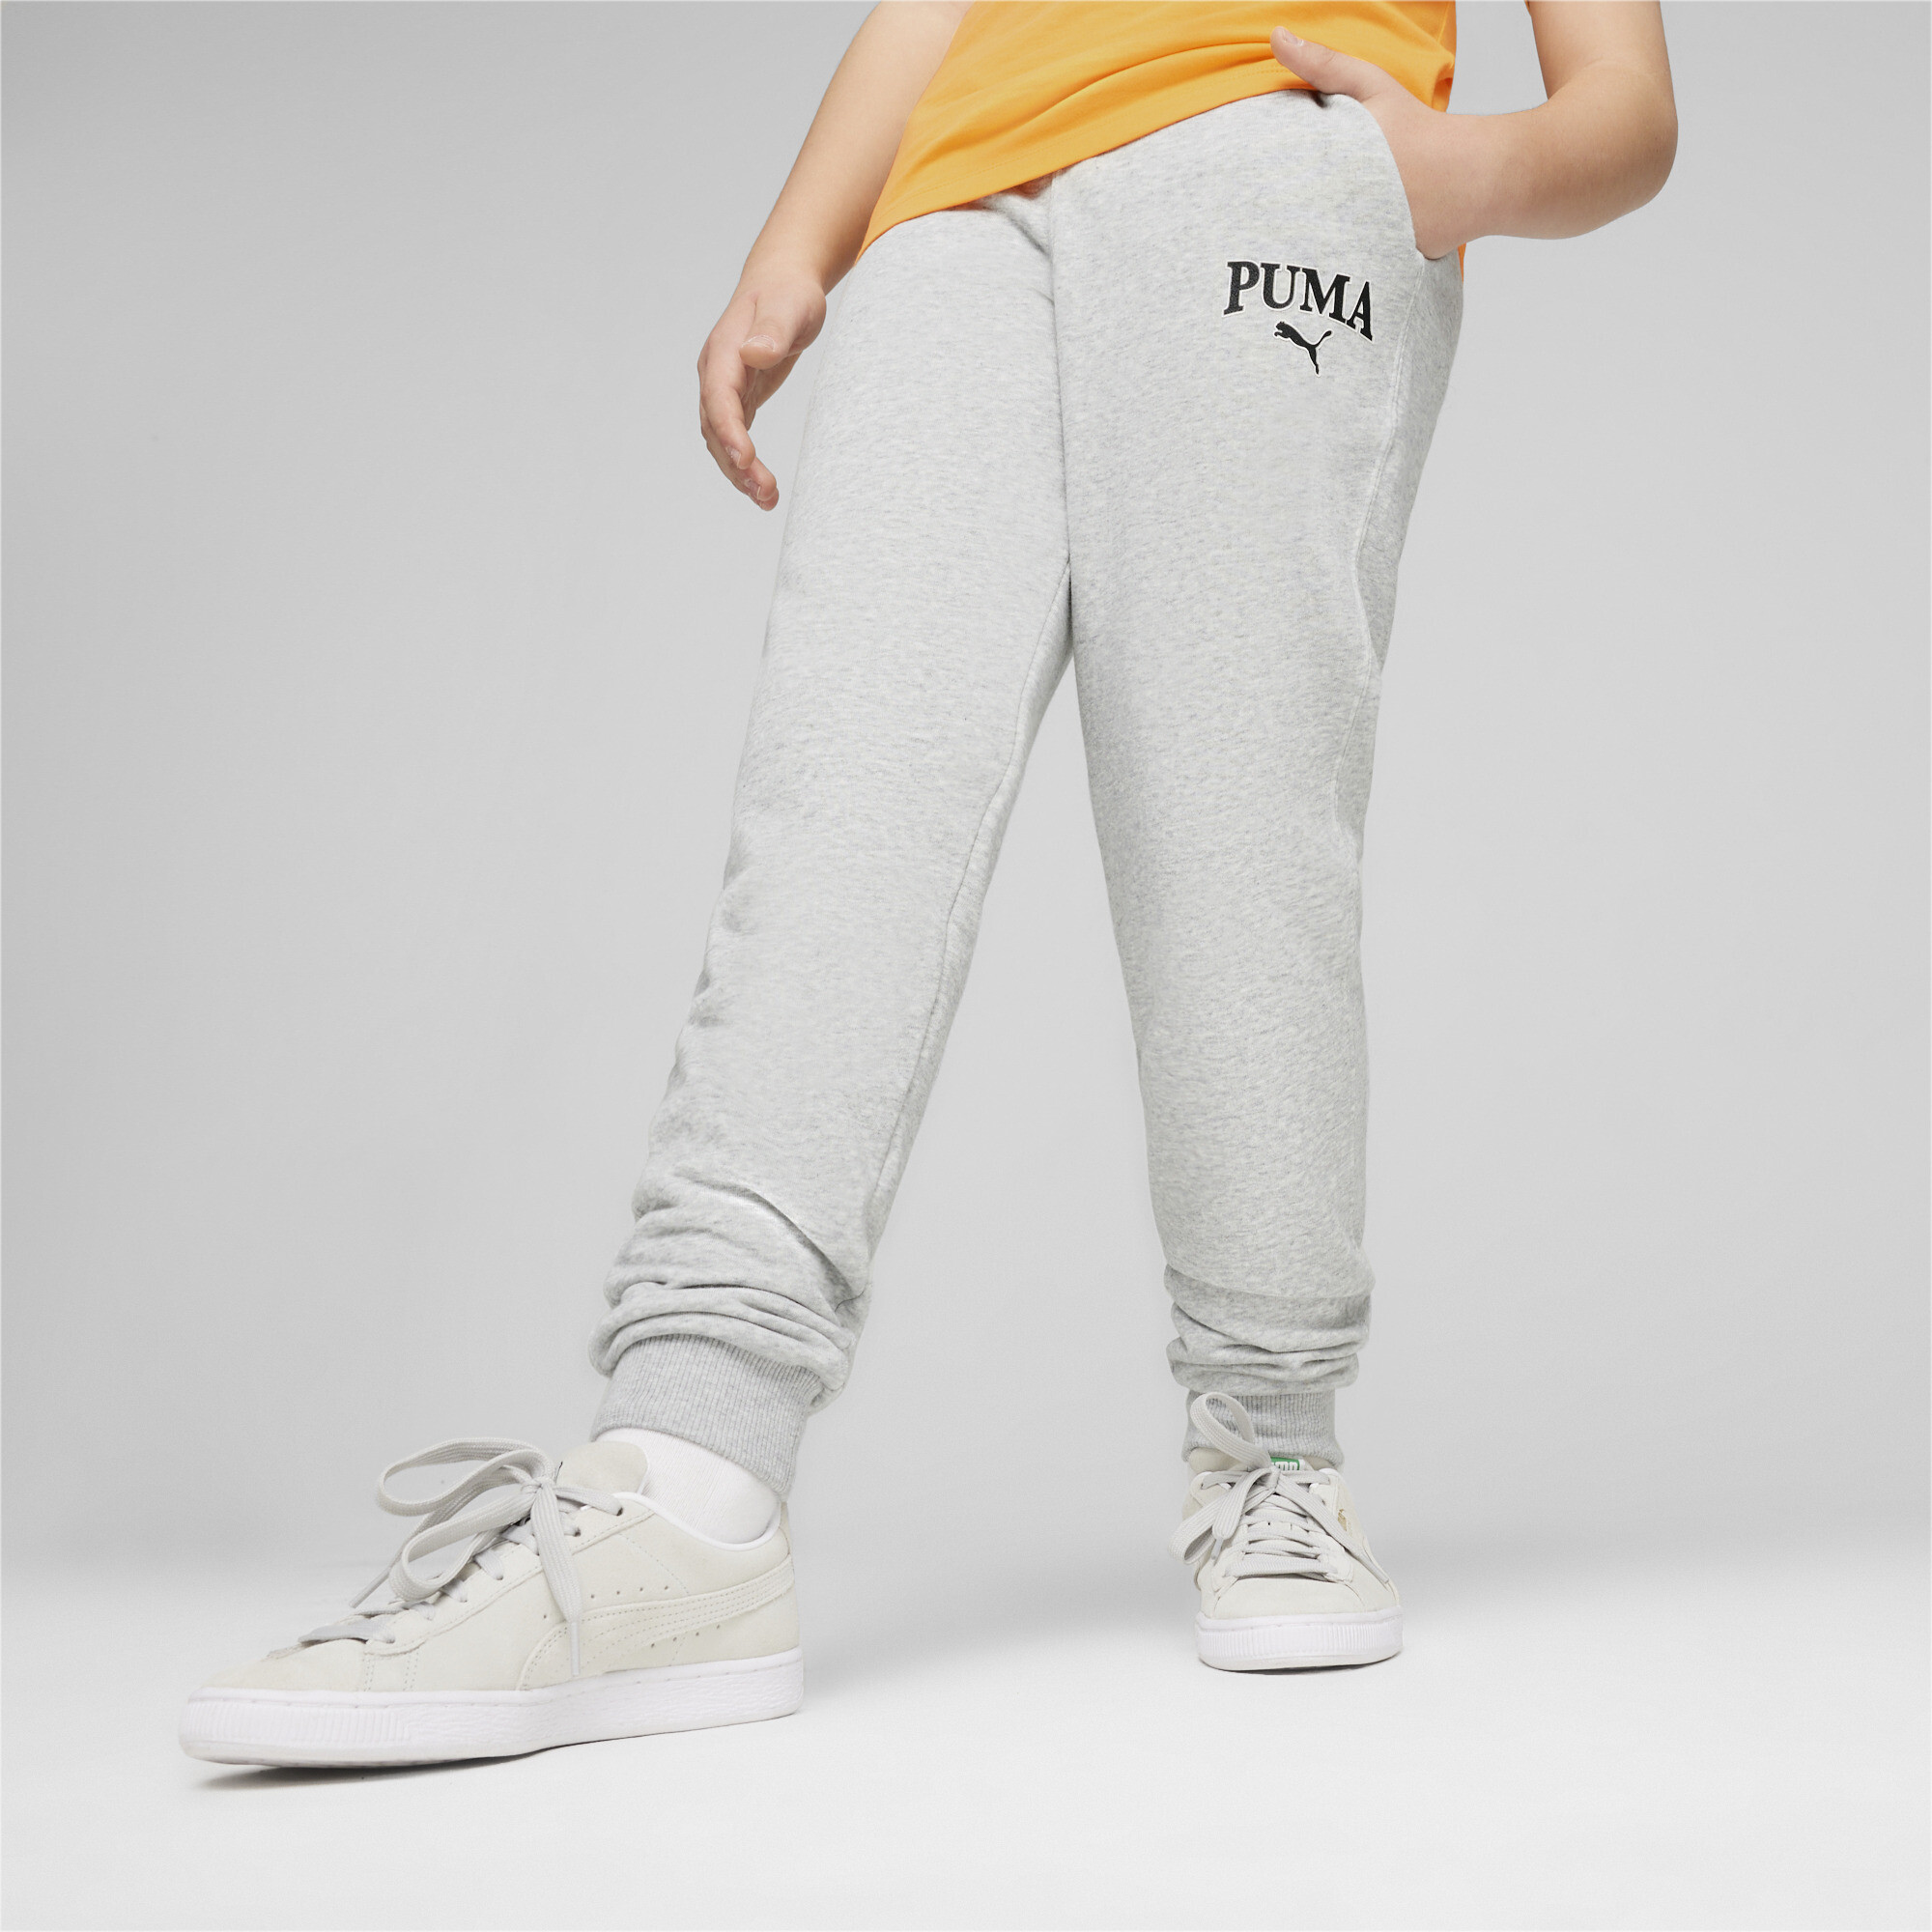 Men's Puma SQUAD Youth Sweatpants, Gray, Size 7-8Y, Age